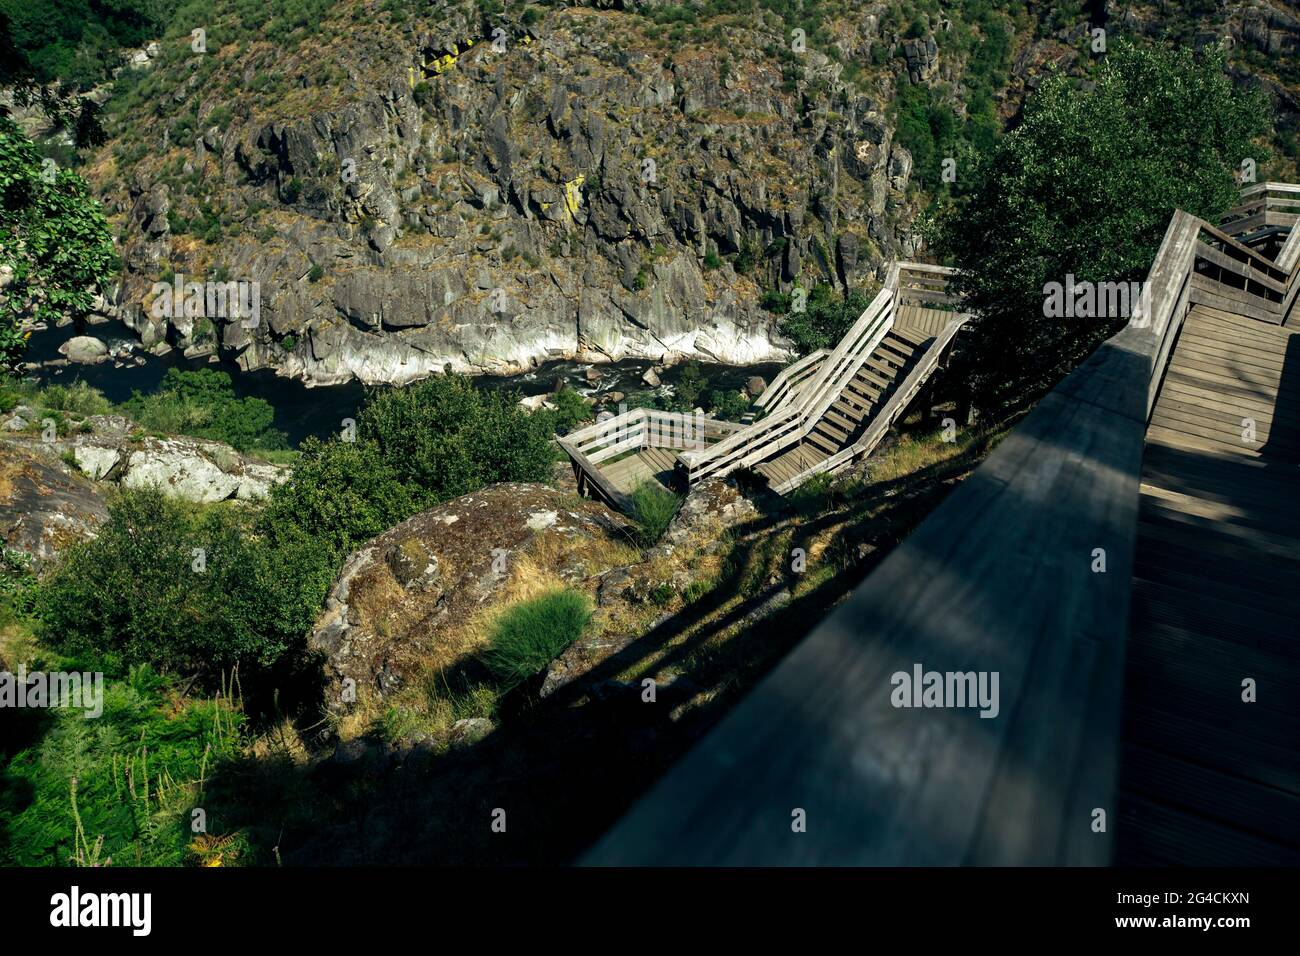 View of the Paiva walkways along the River Paiva, Arouca, Aveiro, Portugal. Stock Photo